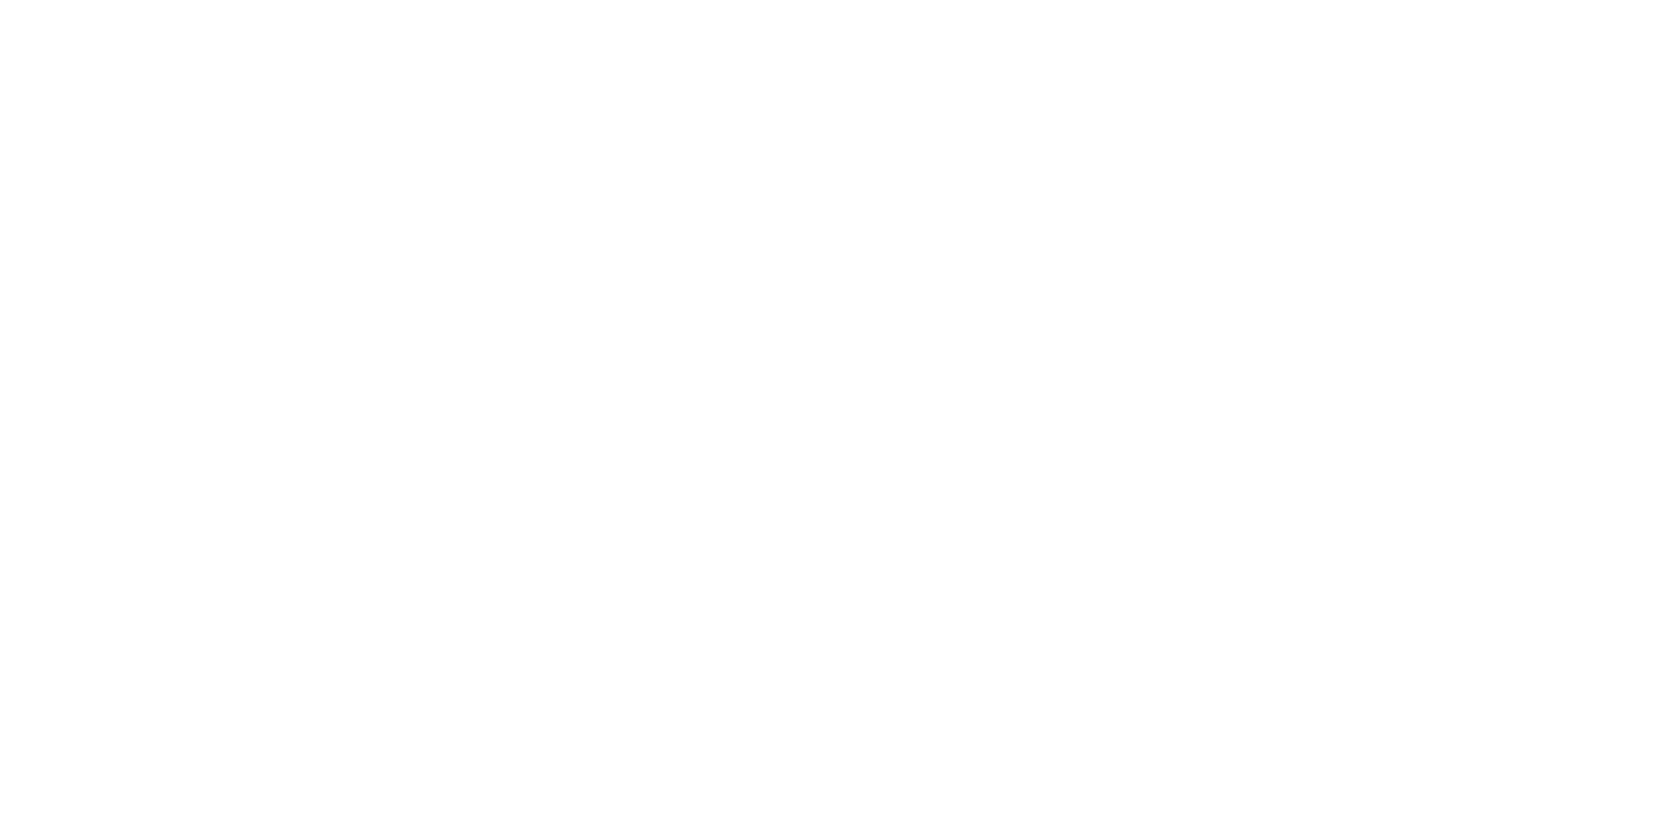 CSPN Member